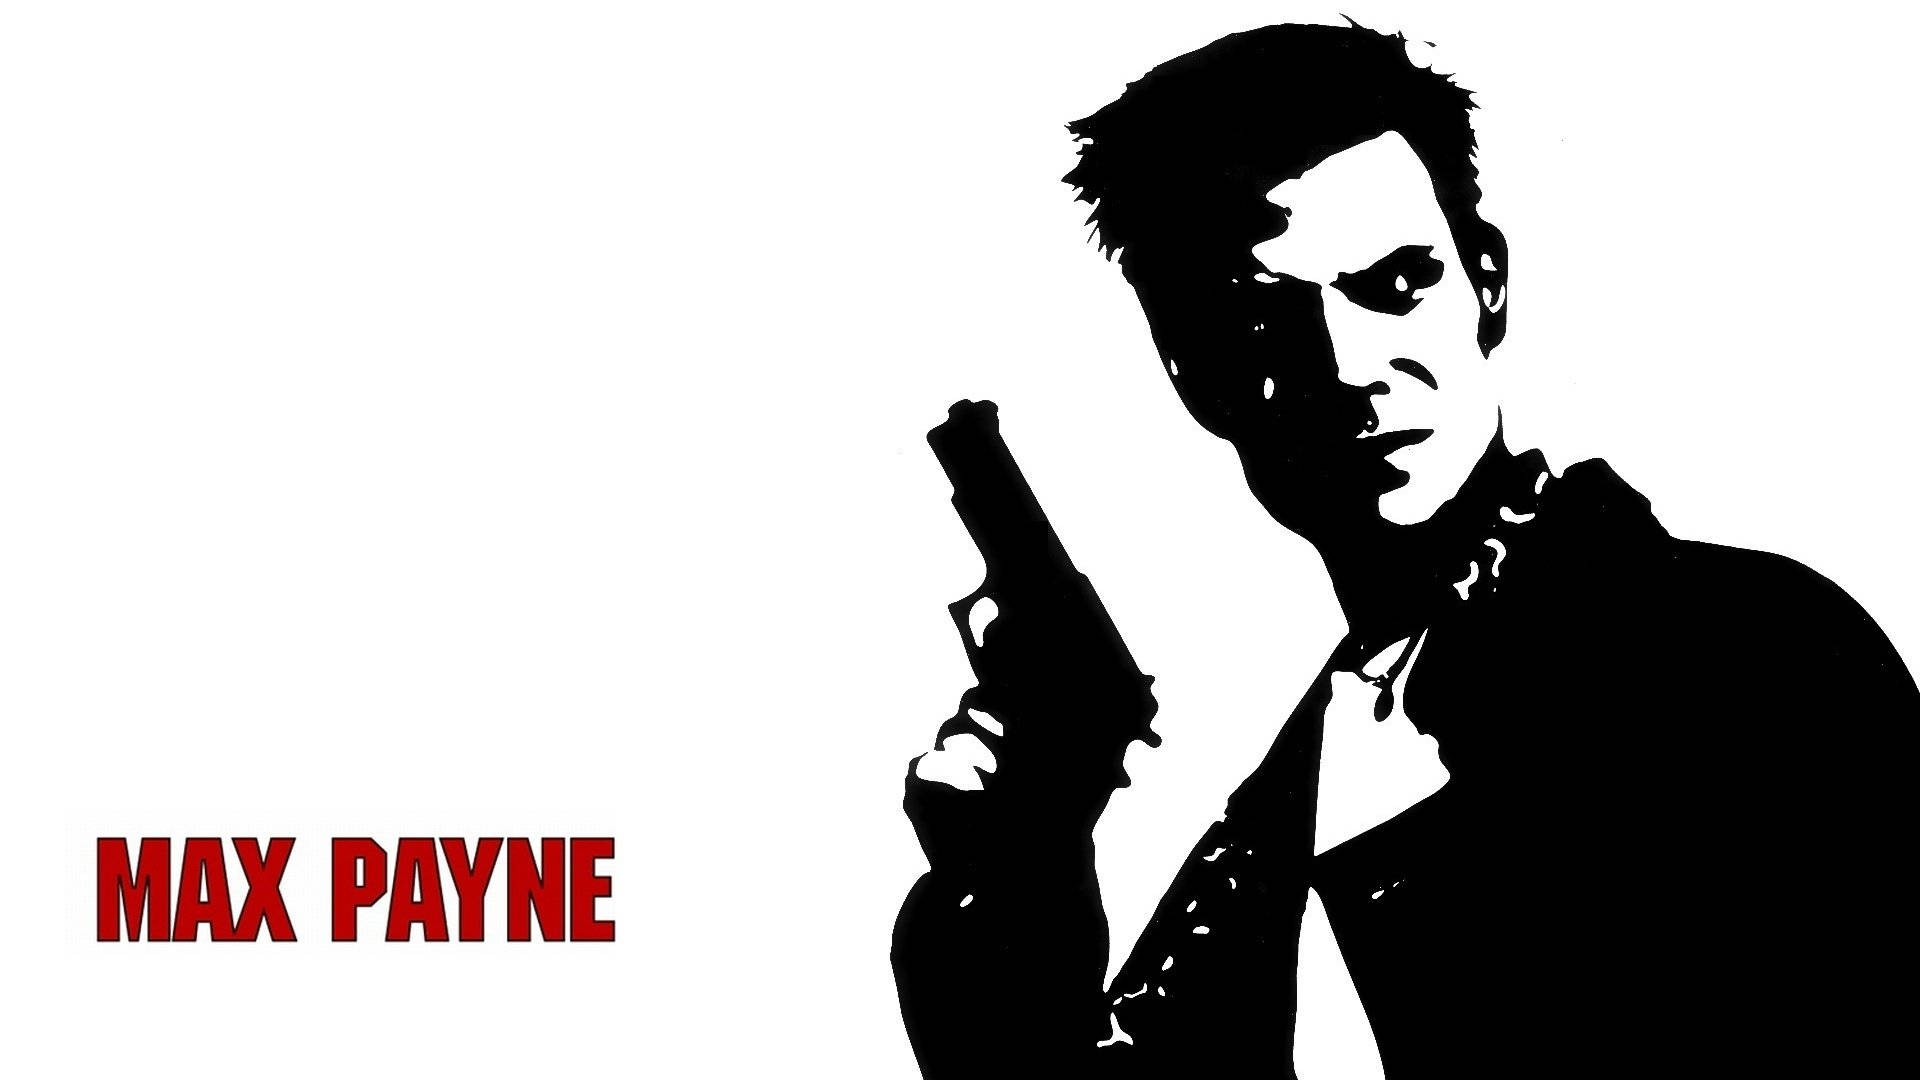 Max Payne Background Photos